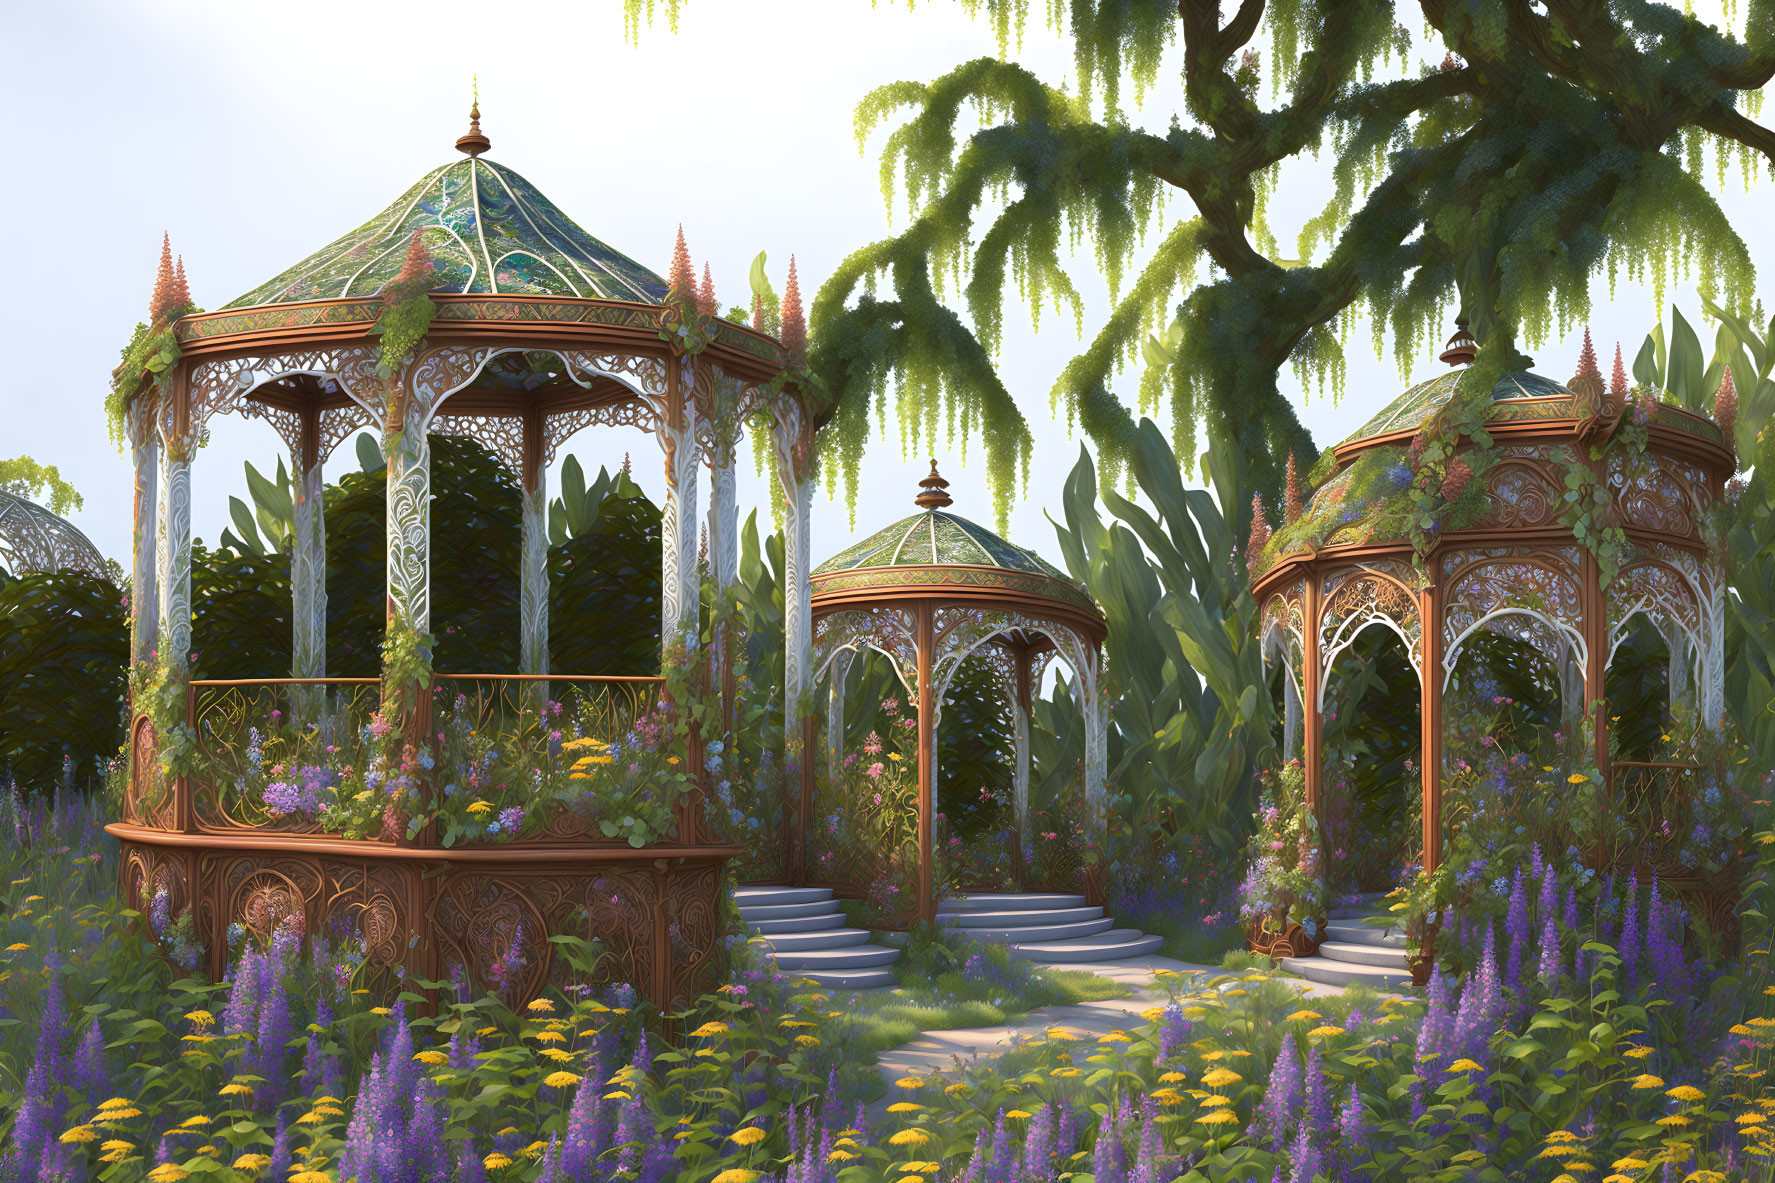 Elegant Garden Gazebos with Purple Flowers and Metalwork